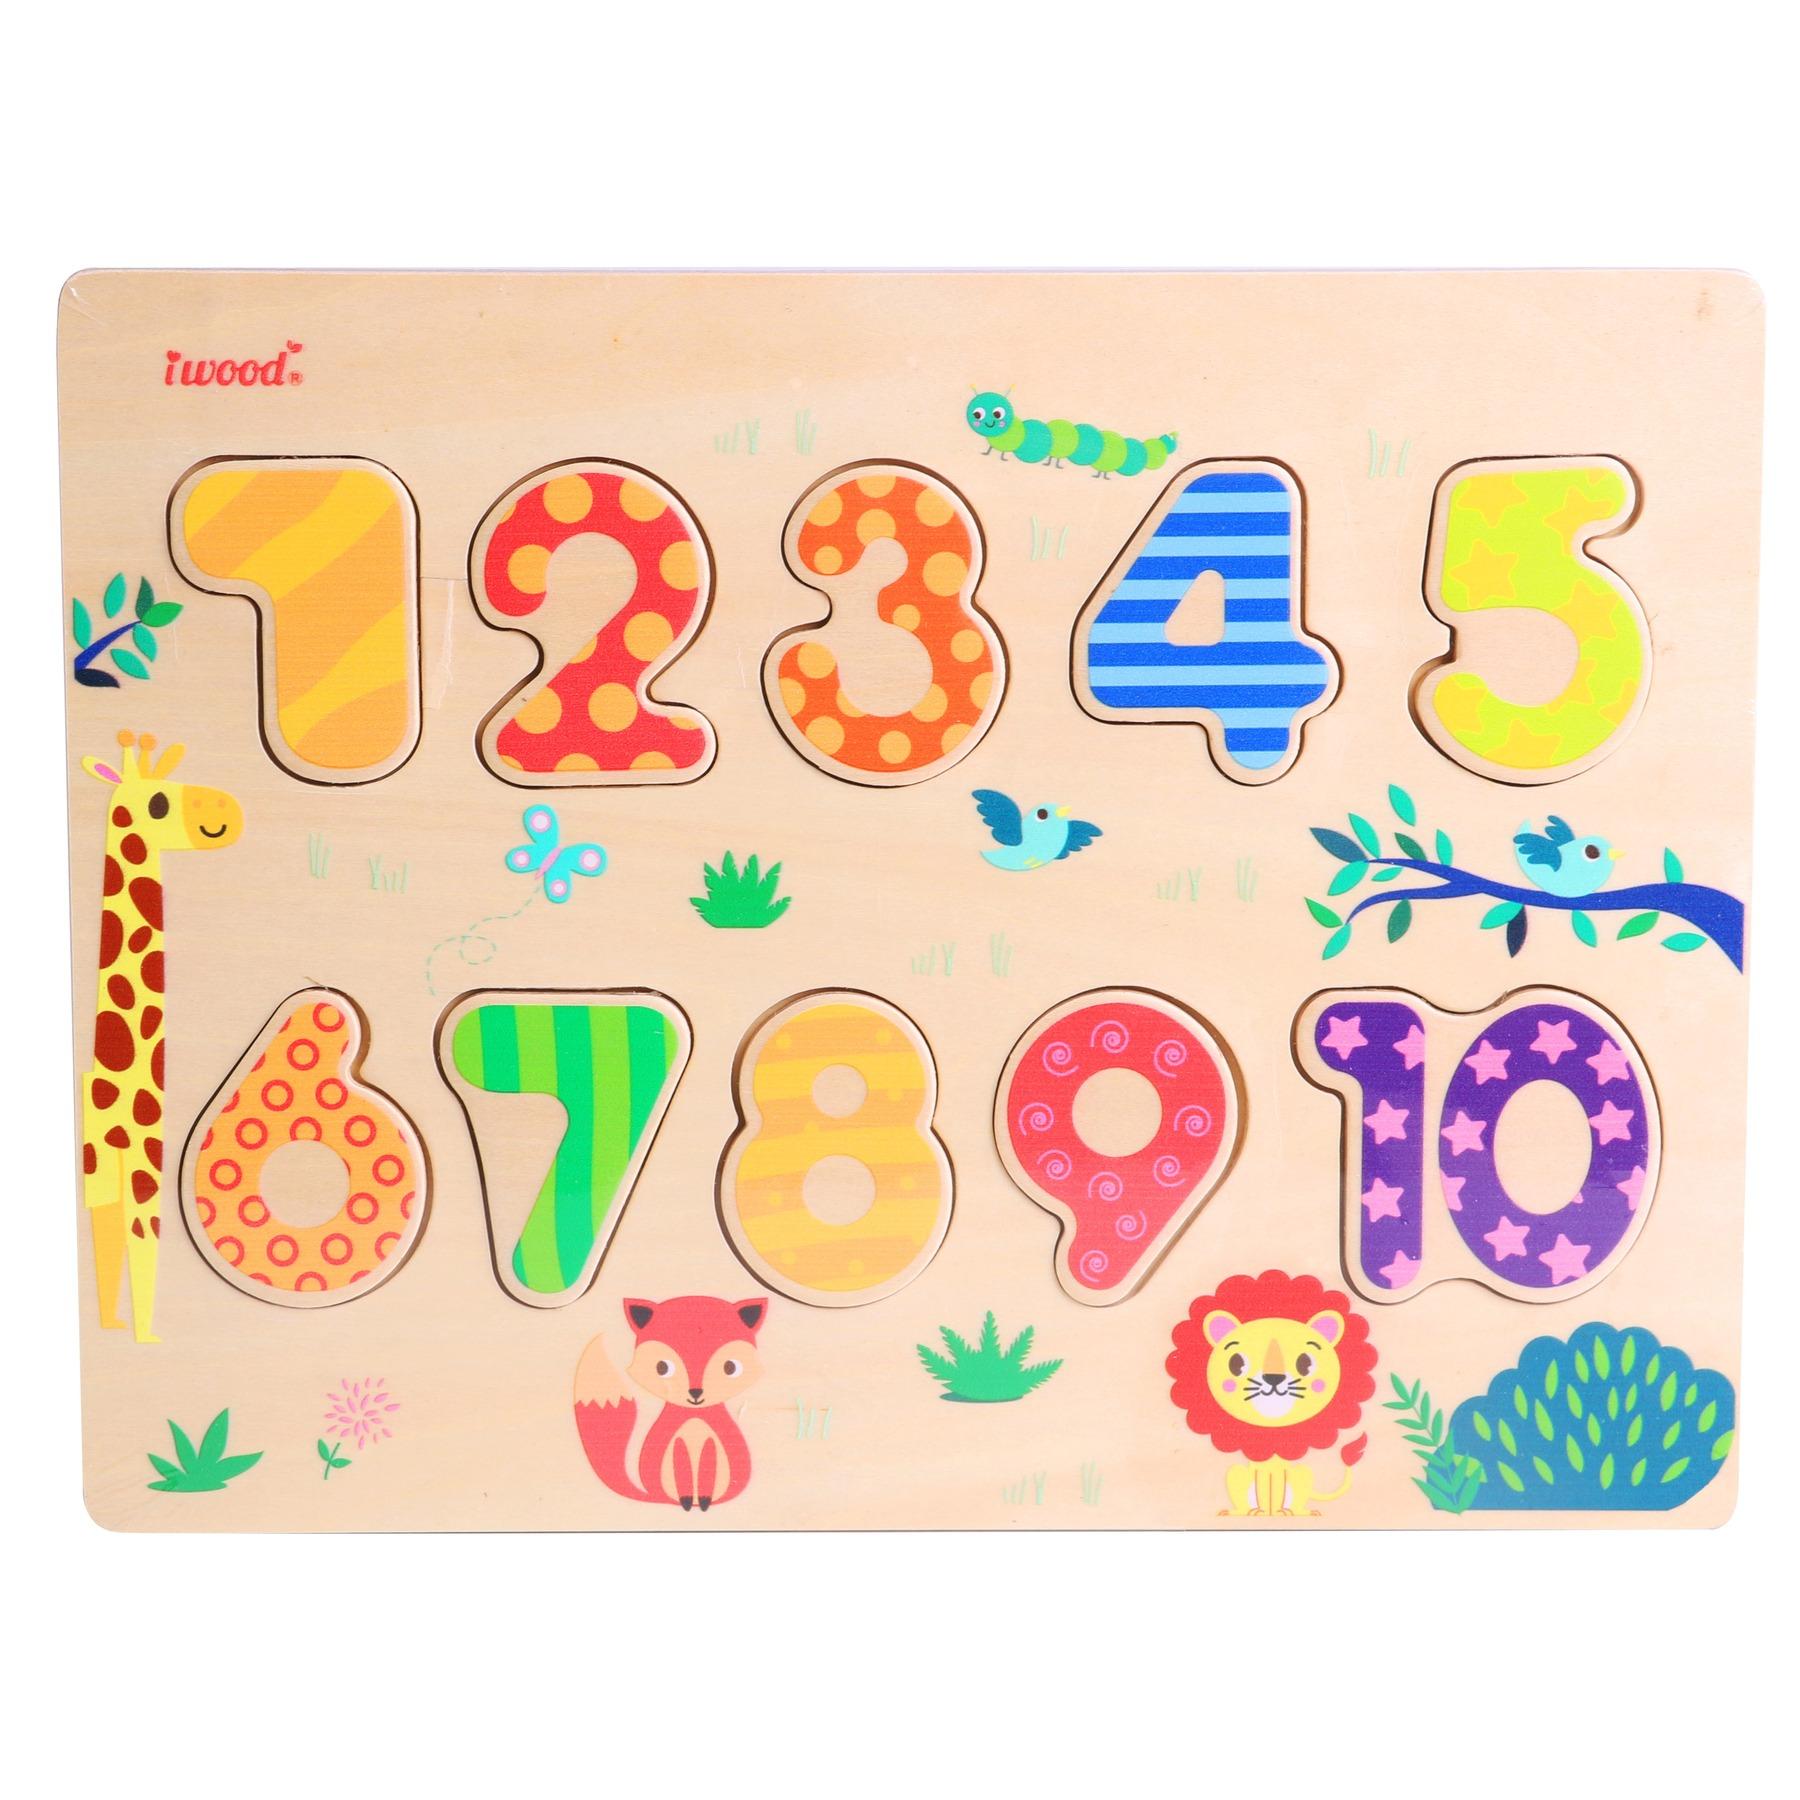 Изображение товара: Iwood-деревянный пазл с цифрами (обучающая игра для детей и младенцев, Монтессори, пазл с 3D цифрами, цвета пазлов)